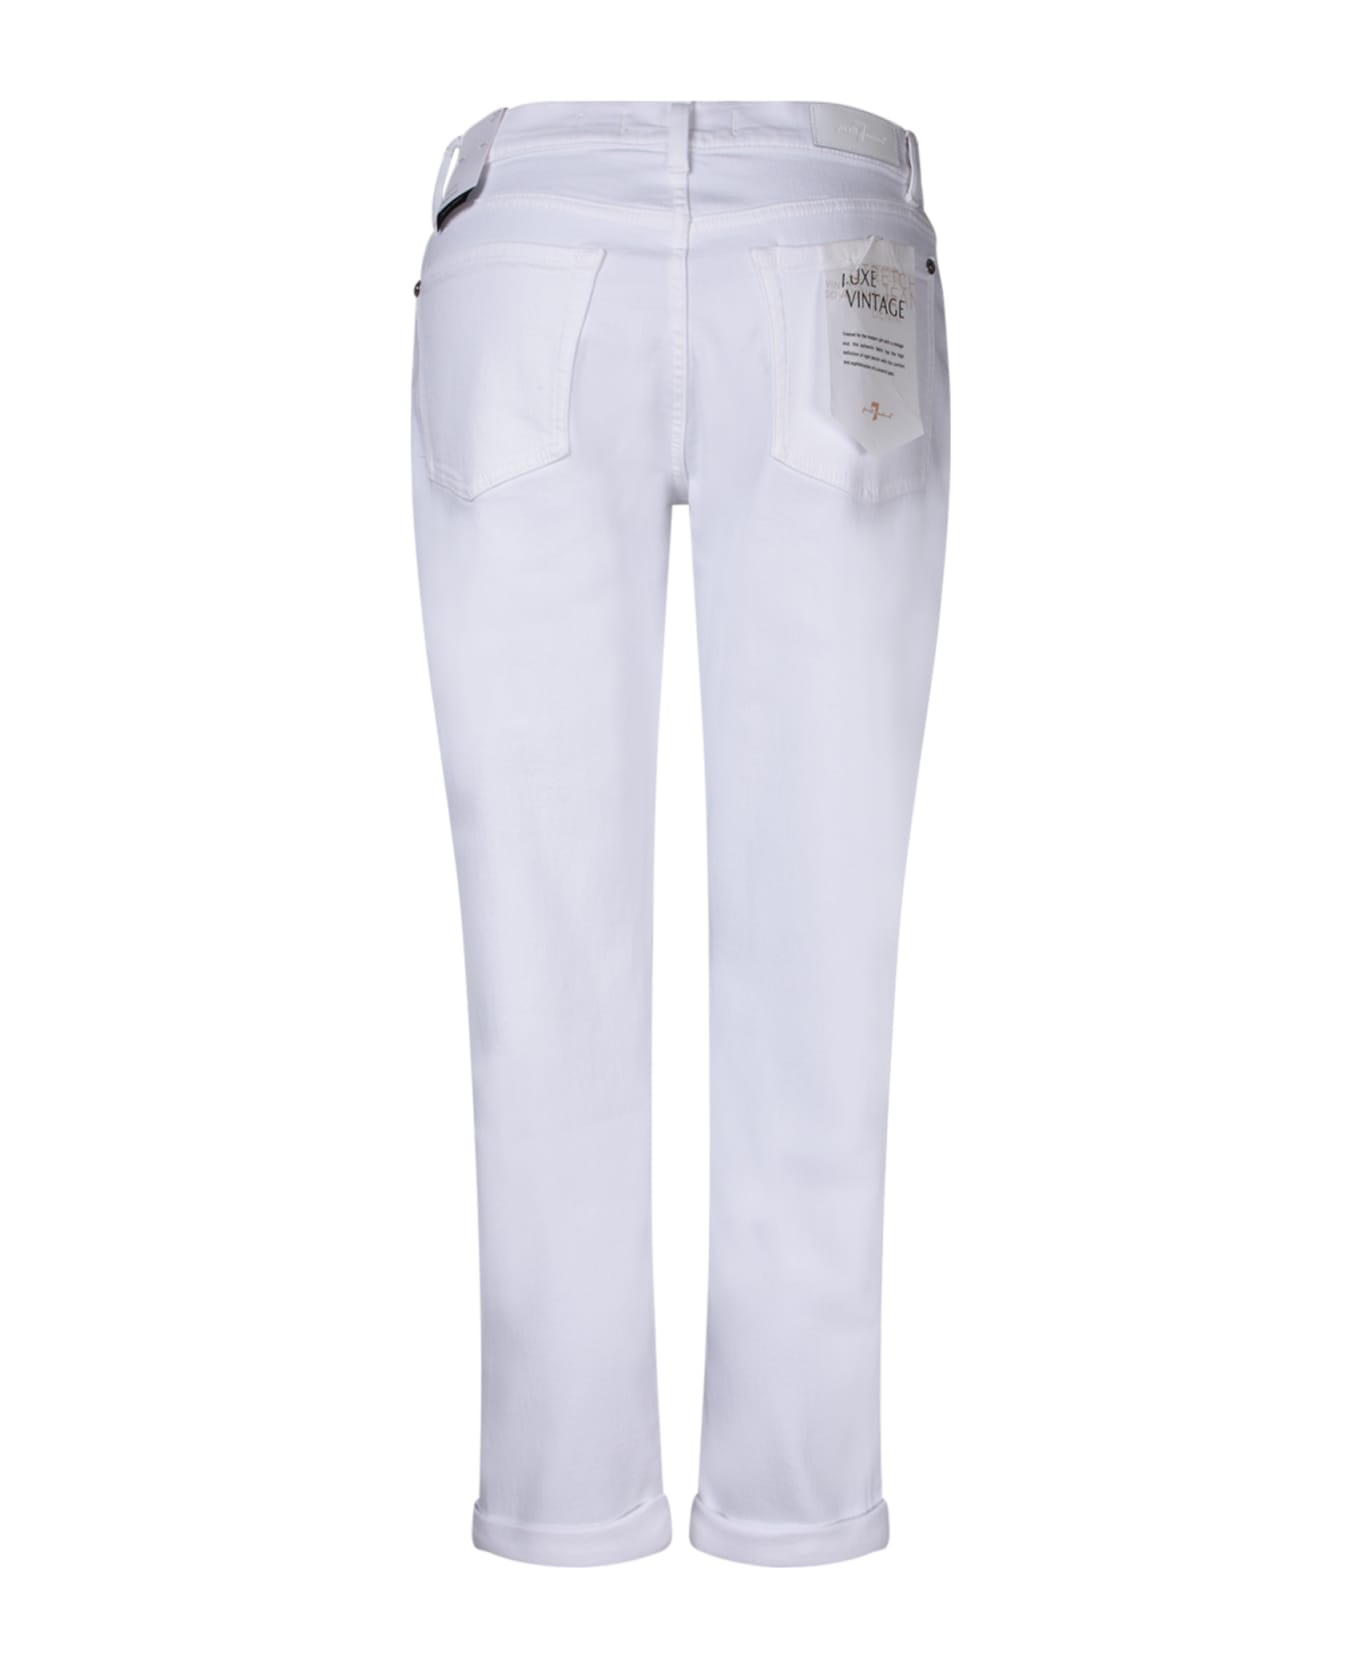 7 For All Mankind Josefina White Jeans - White デニム